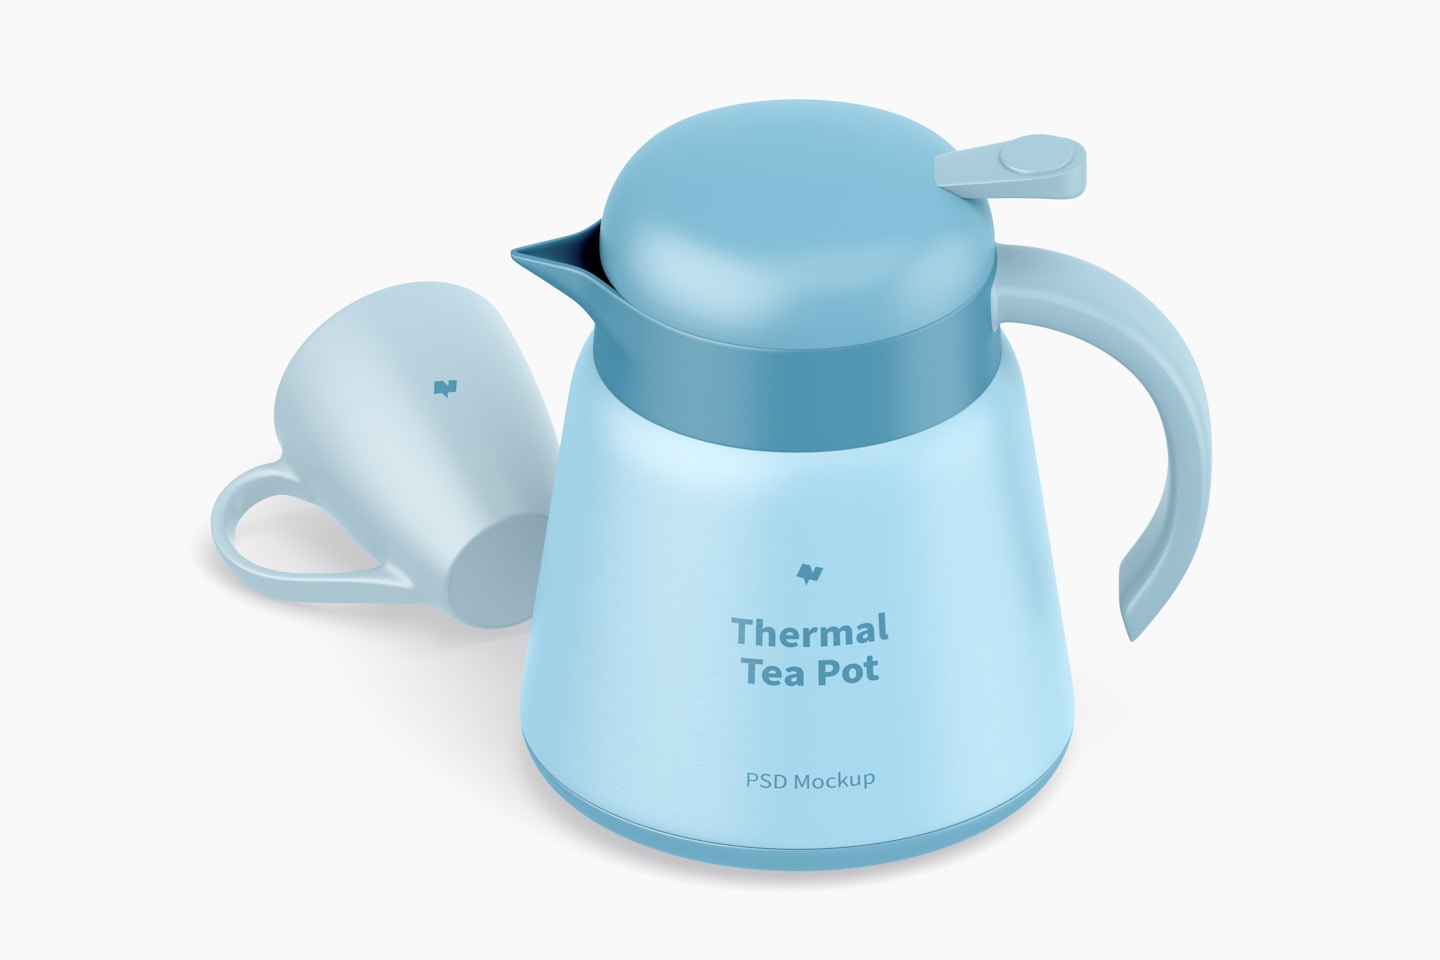 Thermal Tea Pot Mockup, Isometric Left View